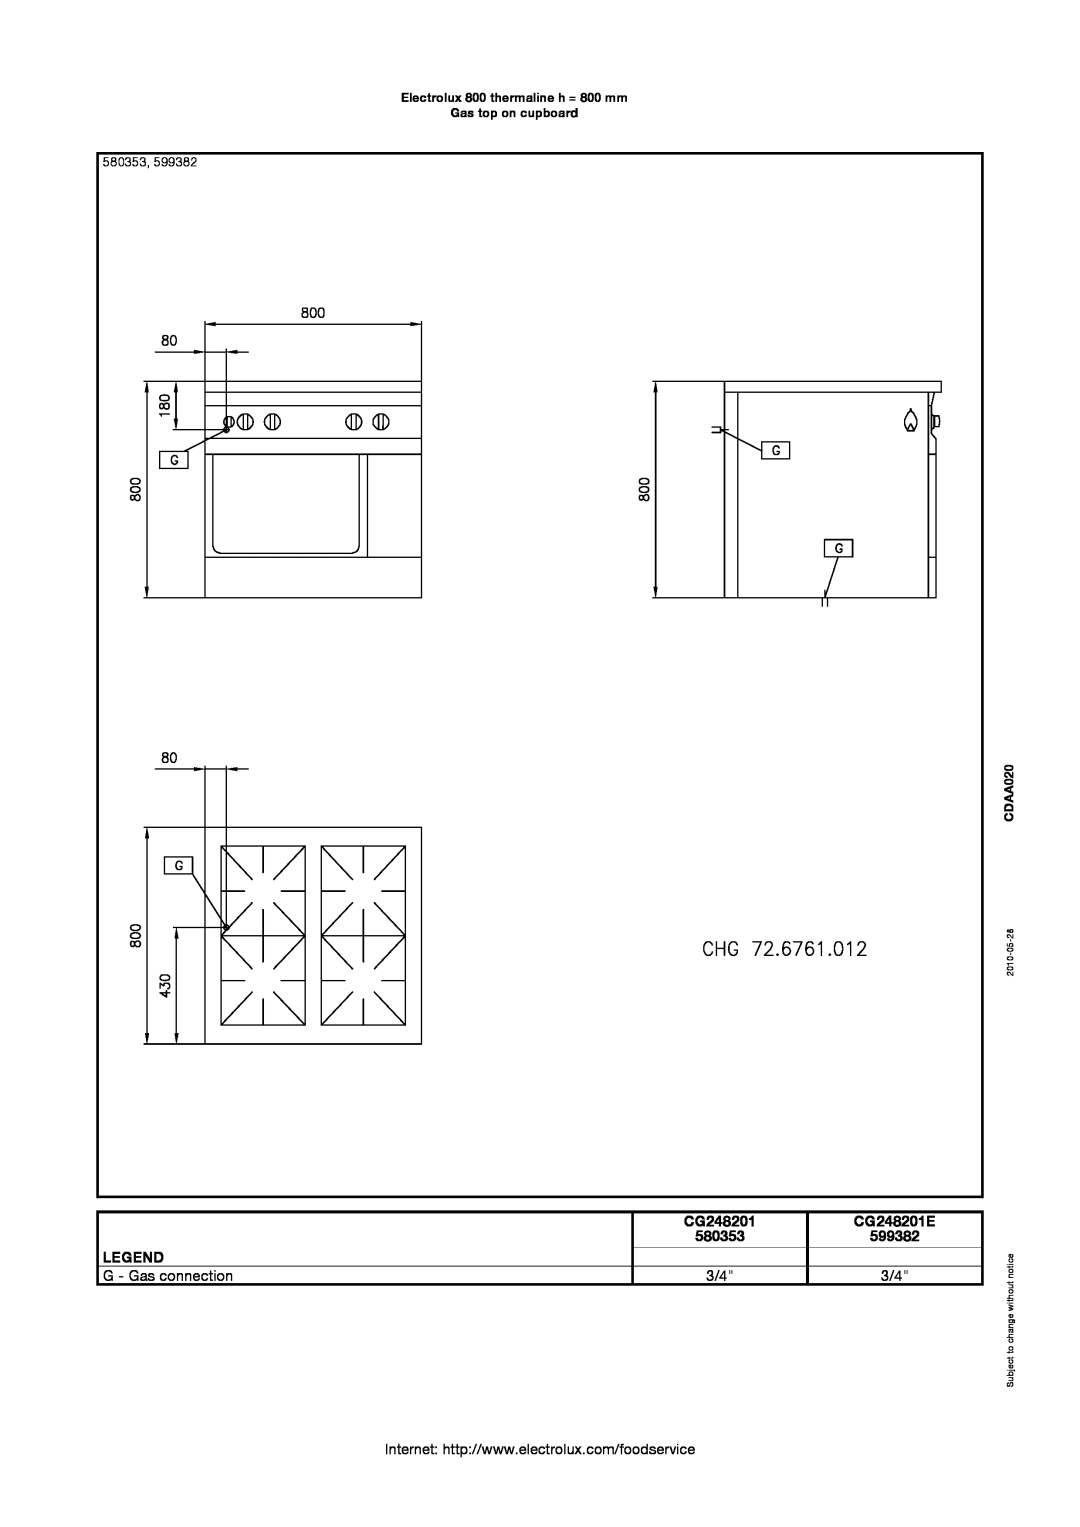 Electrolux manual 580353, Electrolux 800 thermaline h = 800 mm Gas top on cupboard, CDAA020, 2010-05-28 